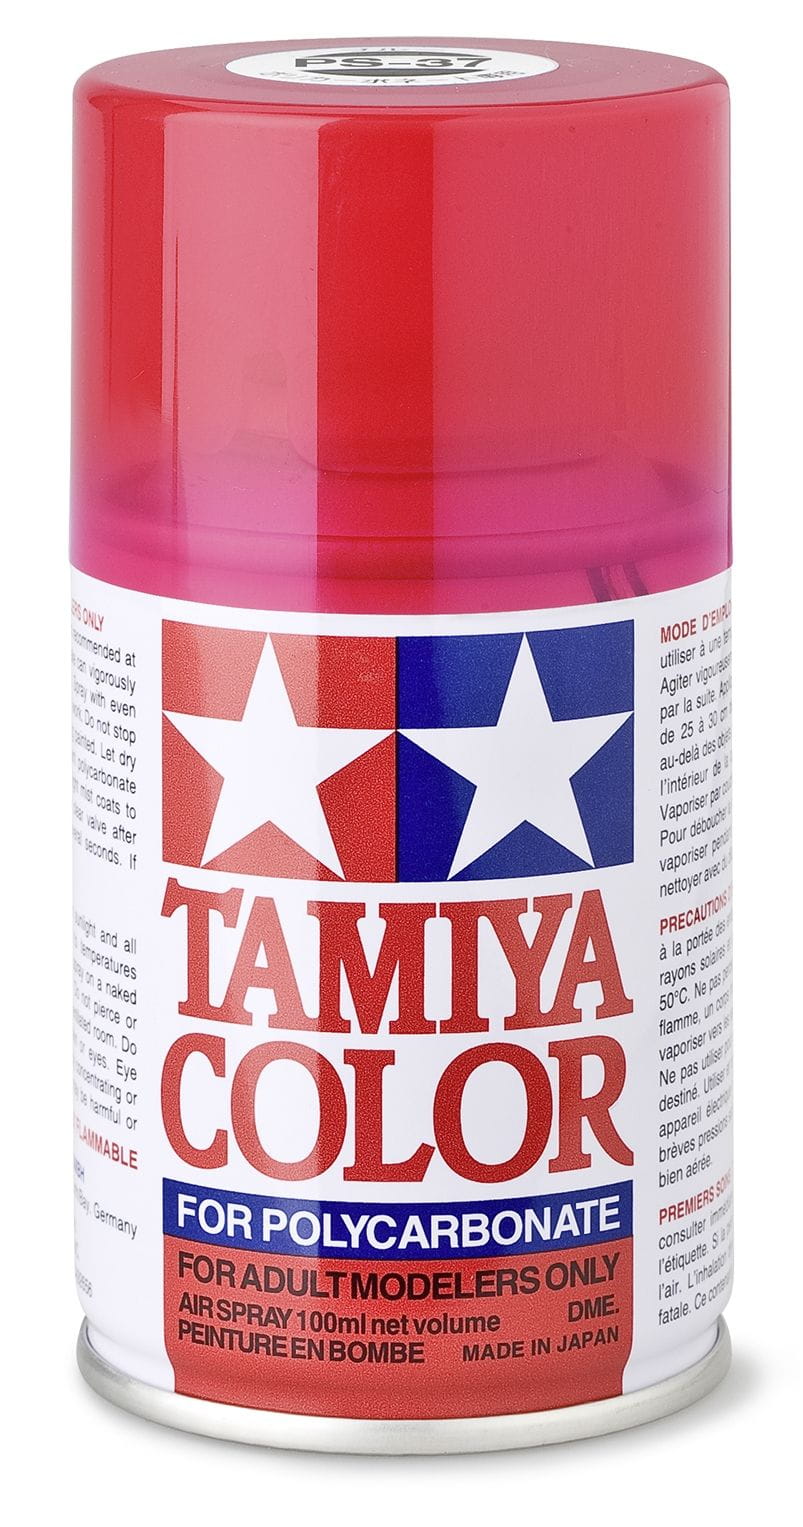 Tamiya PS-37 TRANSLUCENT RED Sprühfarbe 100ml für Polycarbonat ( Lexanfarbe )